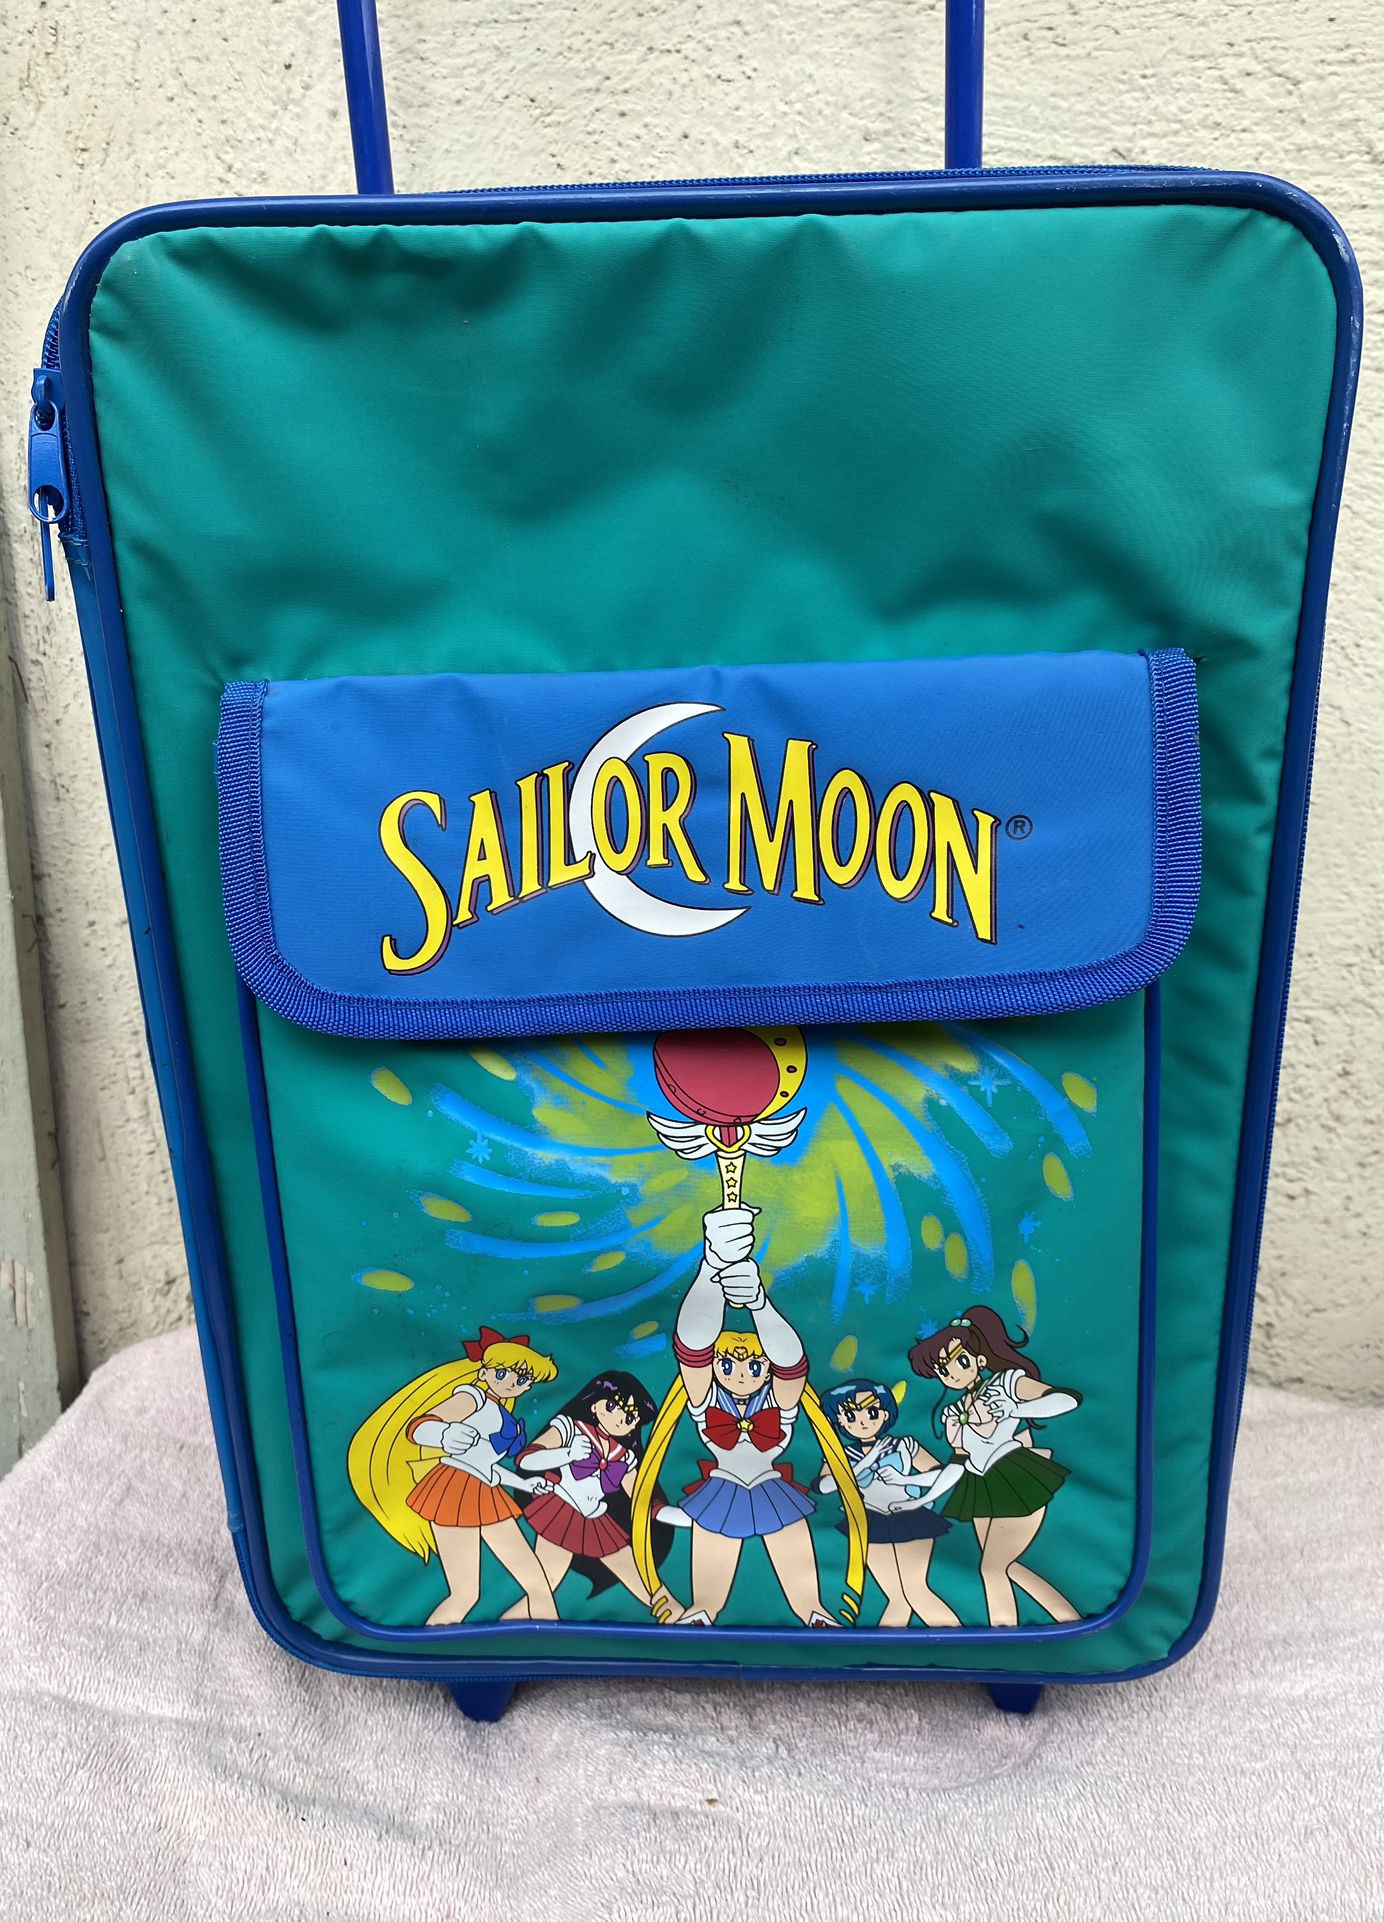 Sailor Moon Suitcase 